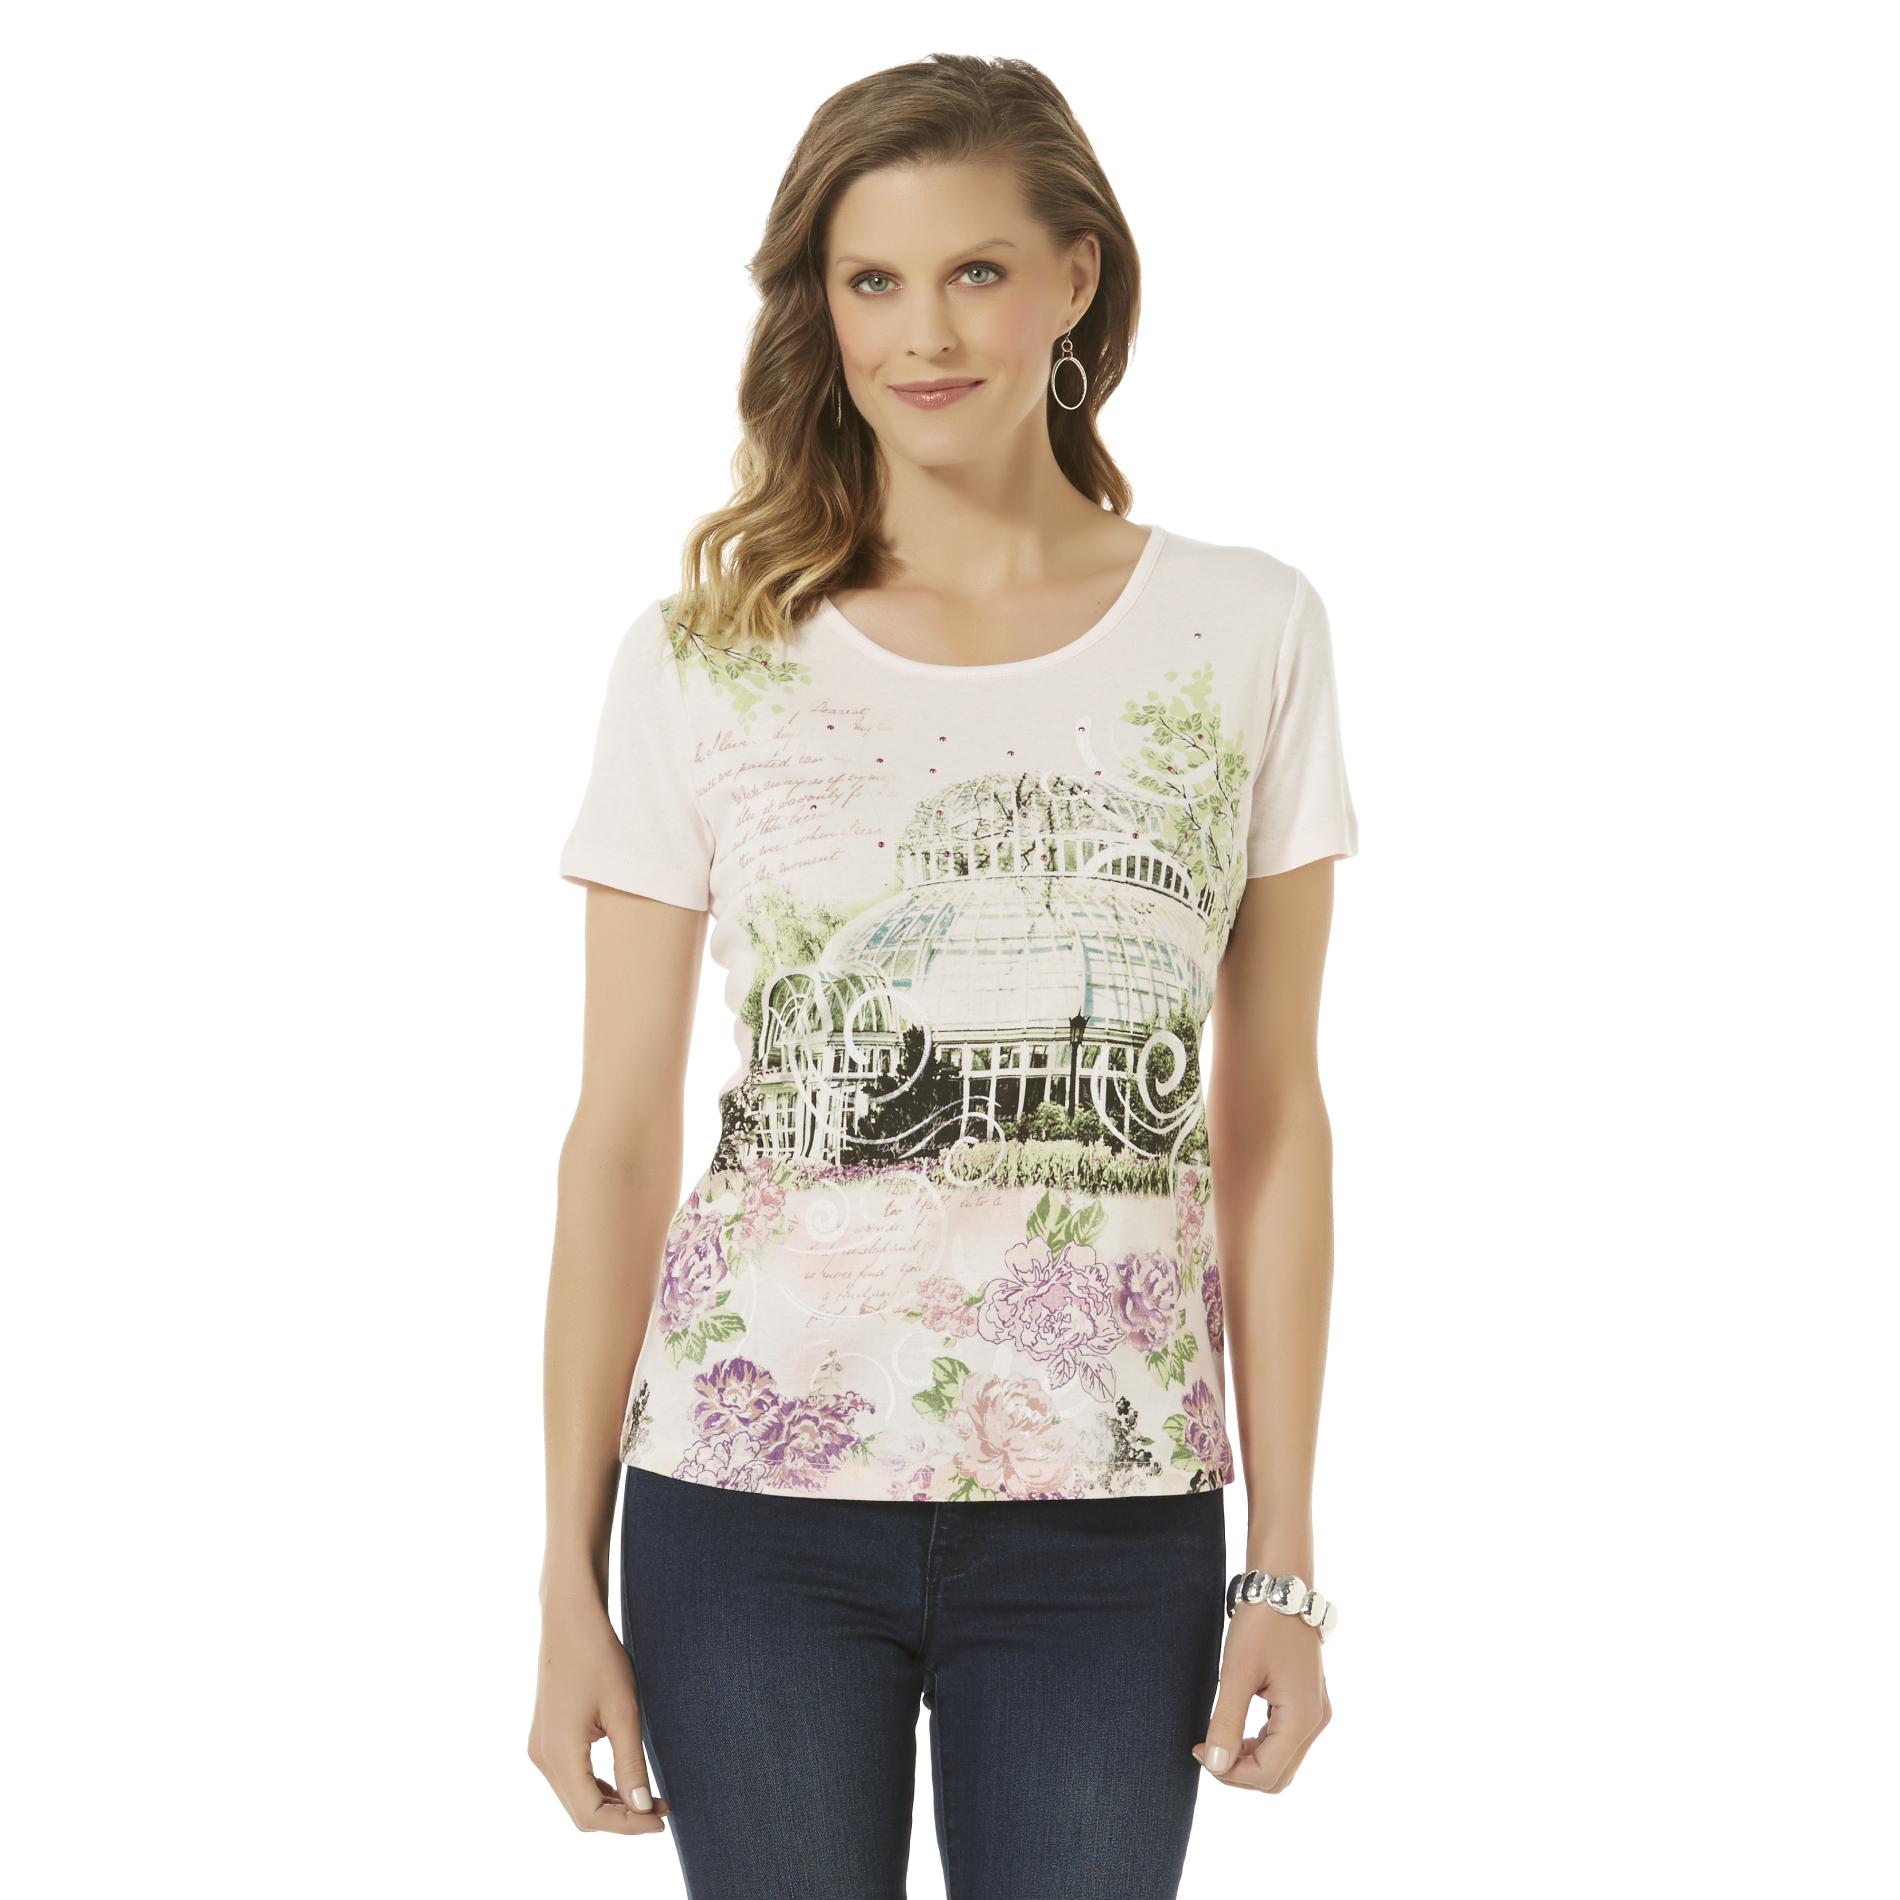 Women's Graphic T-Shirt - Floral